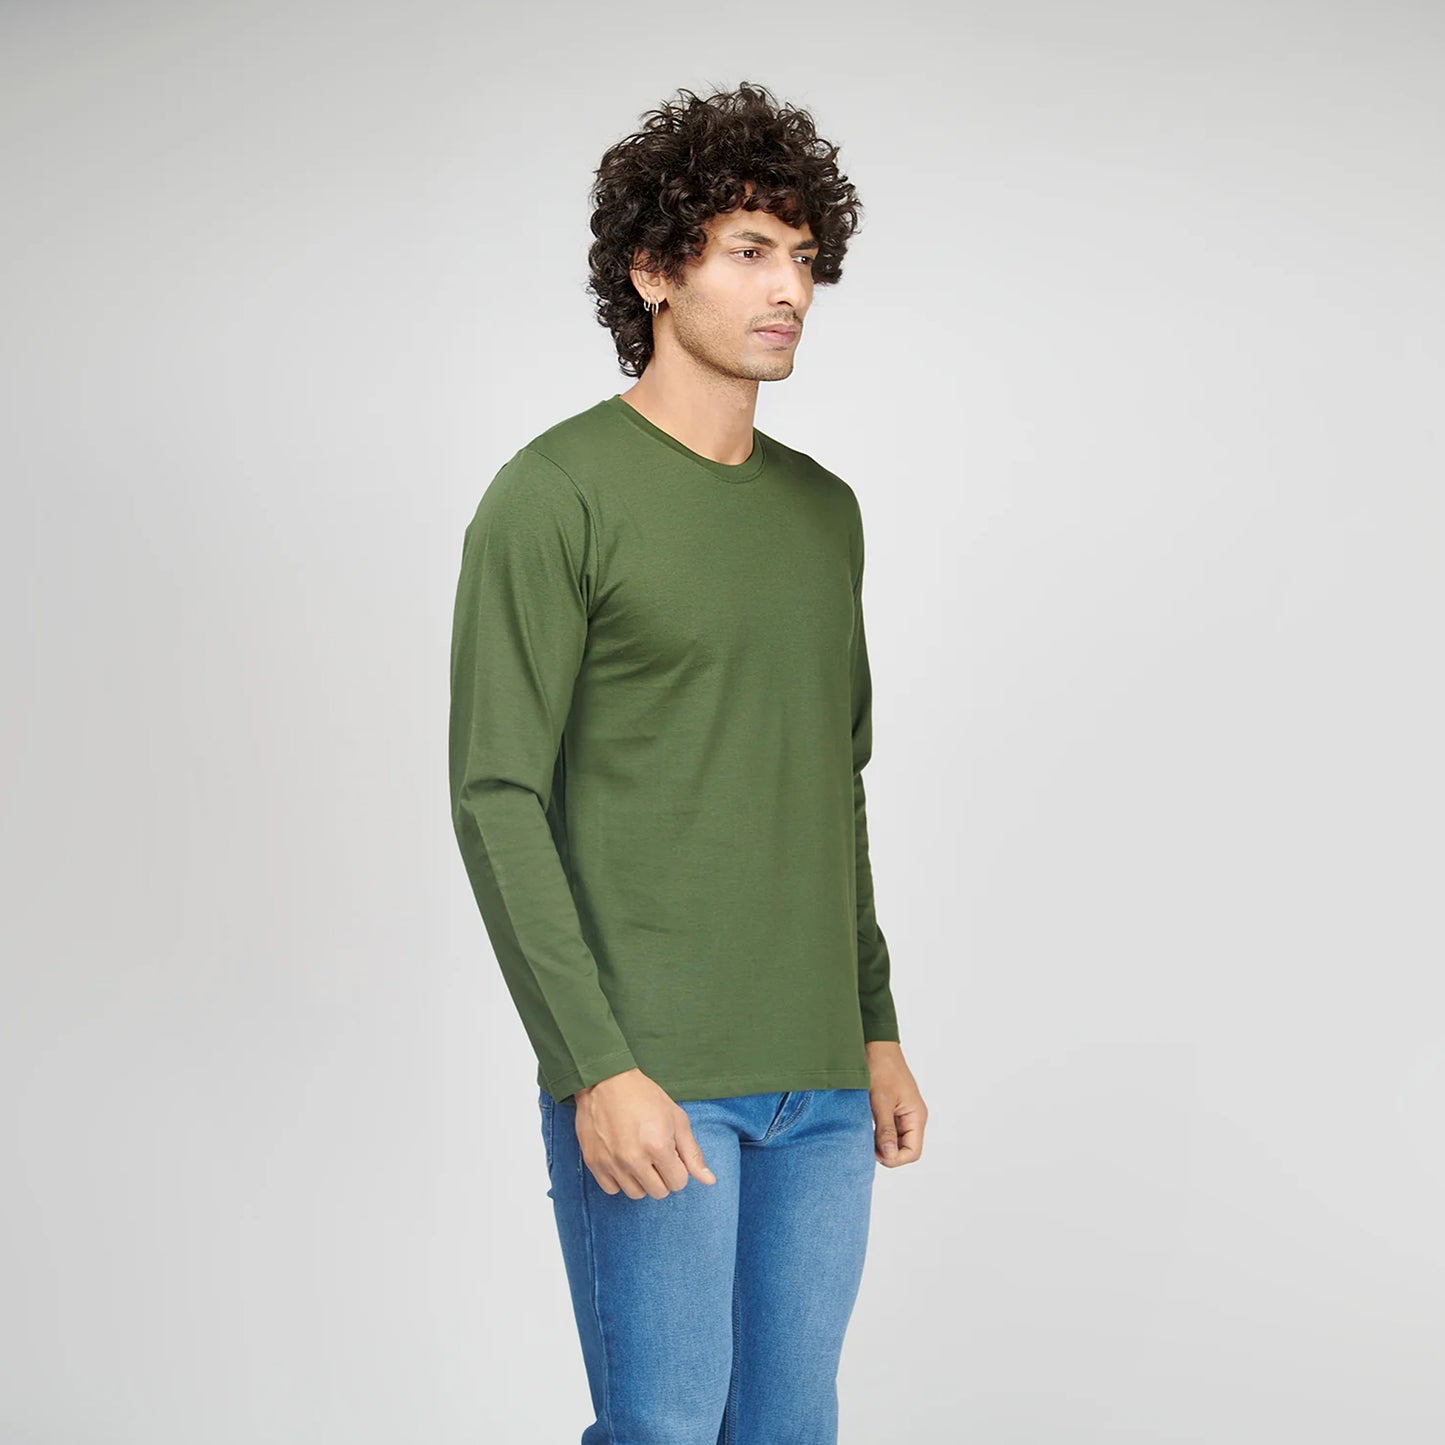 Basic Army Green Full Sleeves T-Shirt